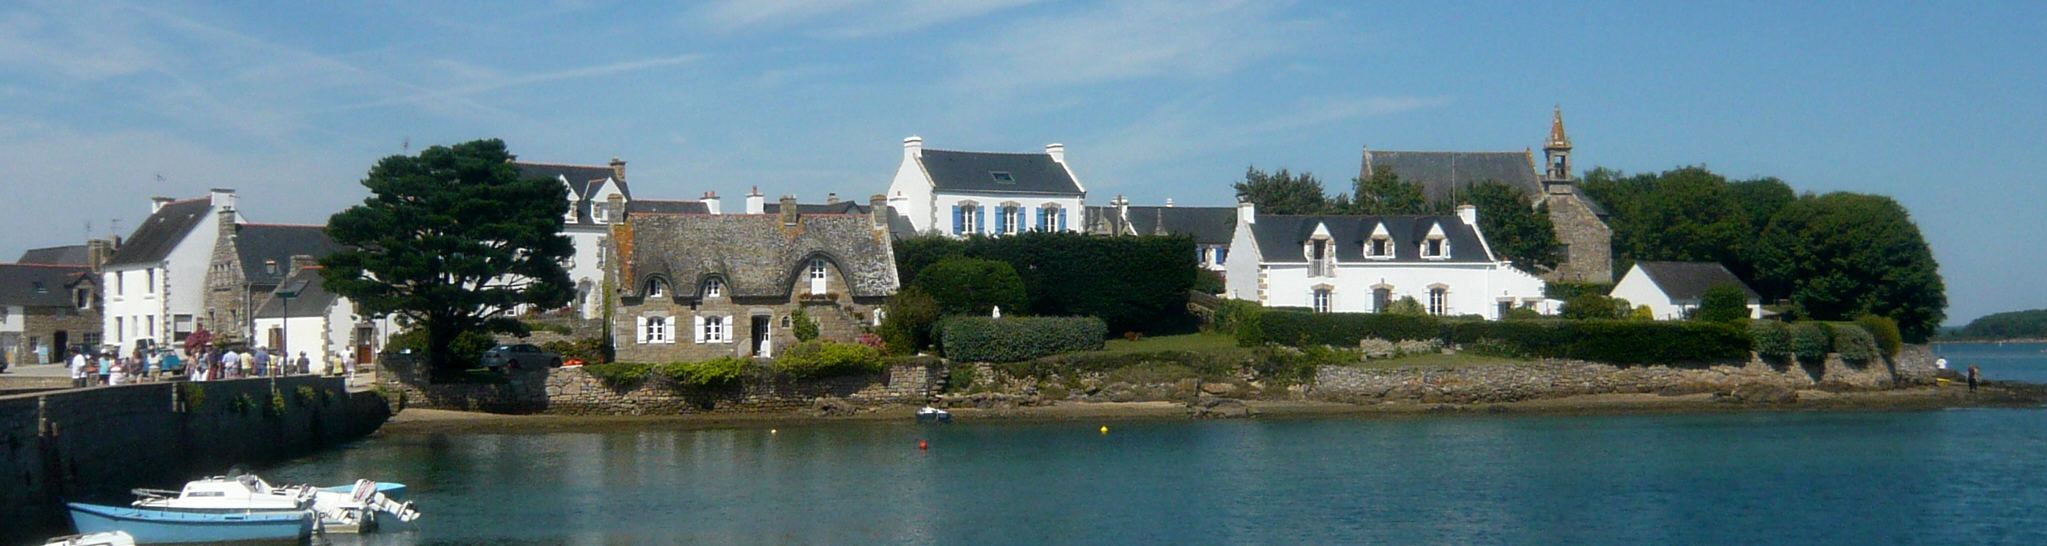 Private tours in Bretagne. Here, Saint Cado in Morbihan.